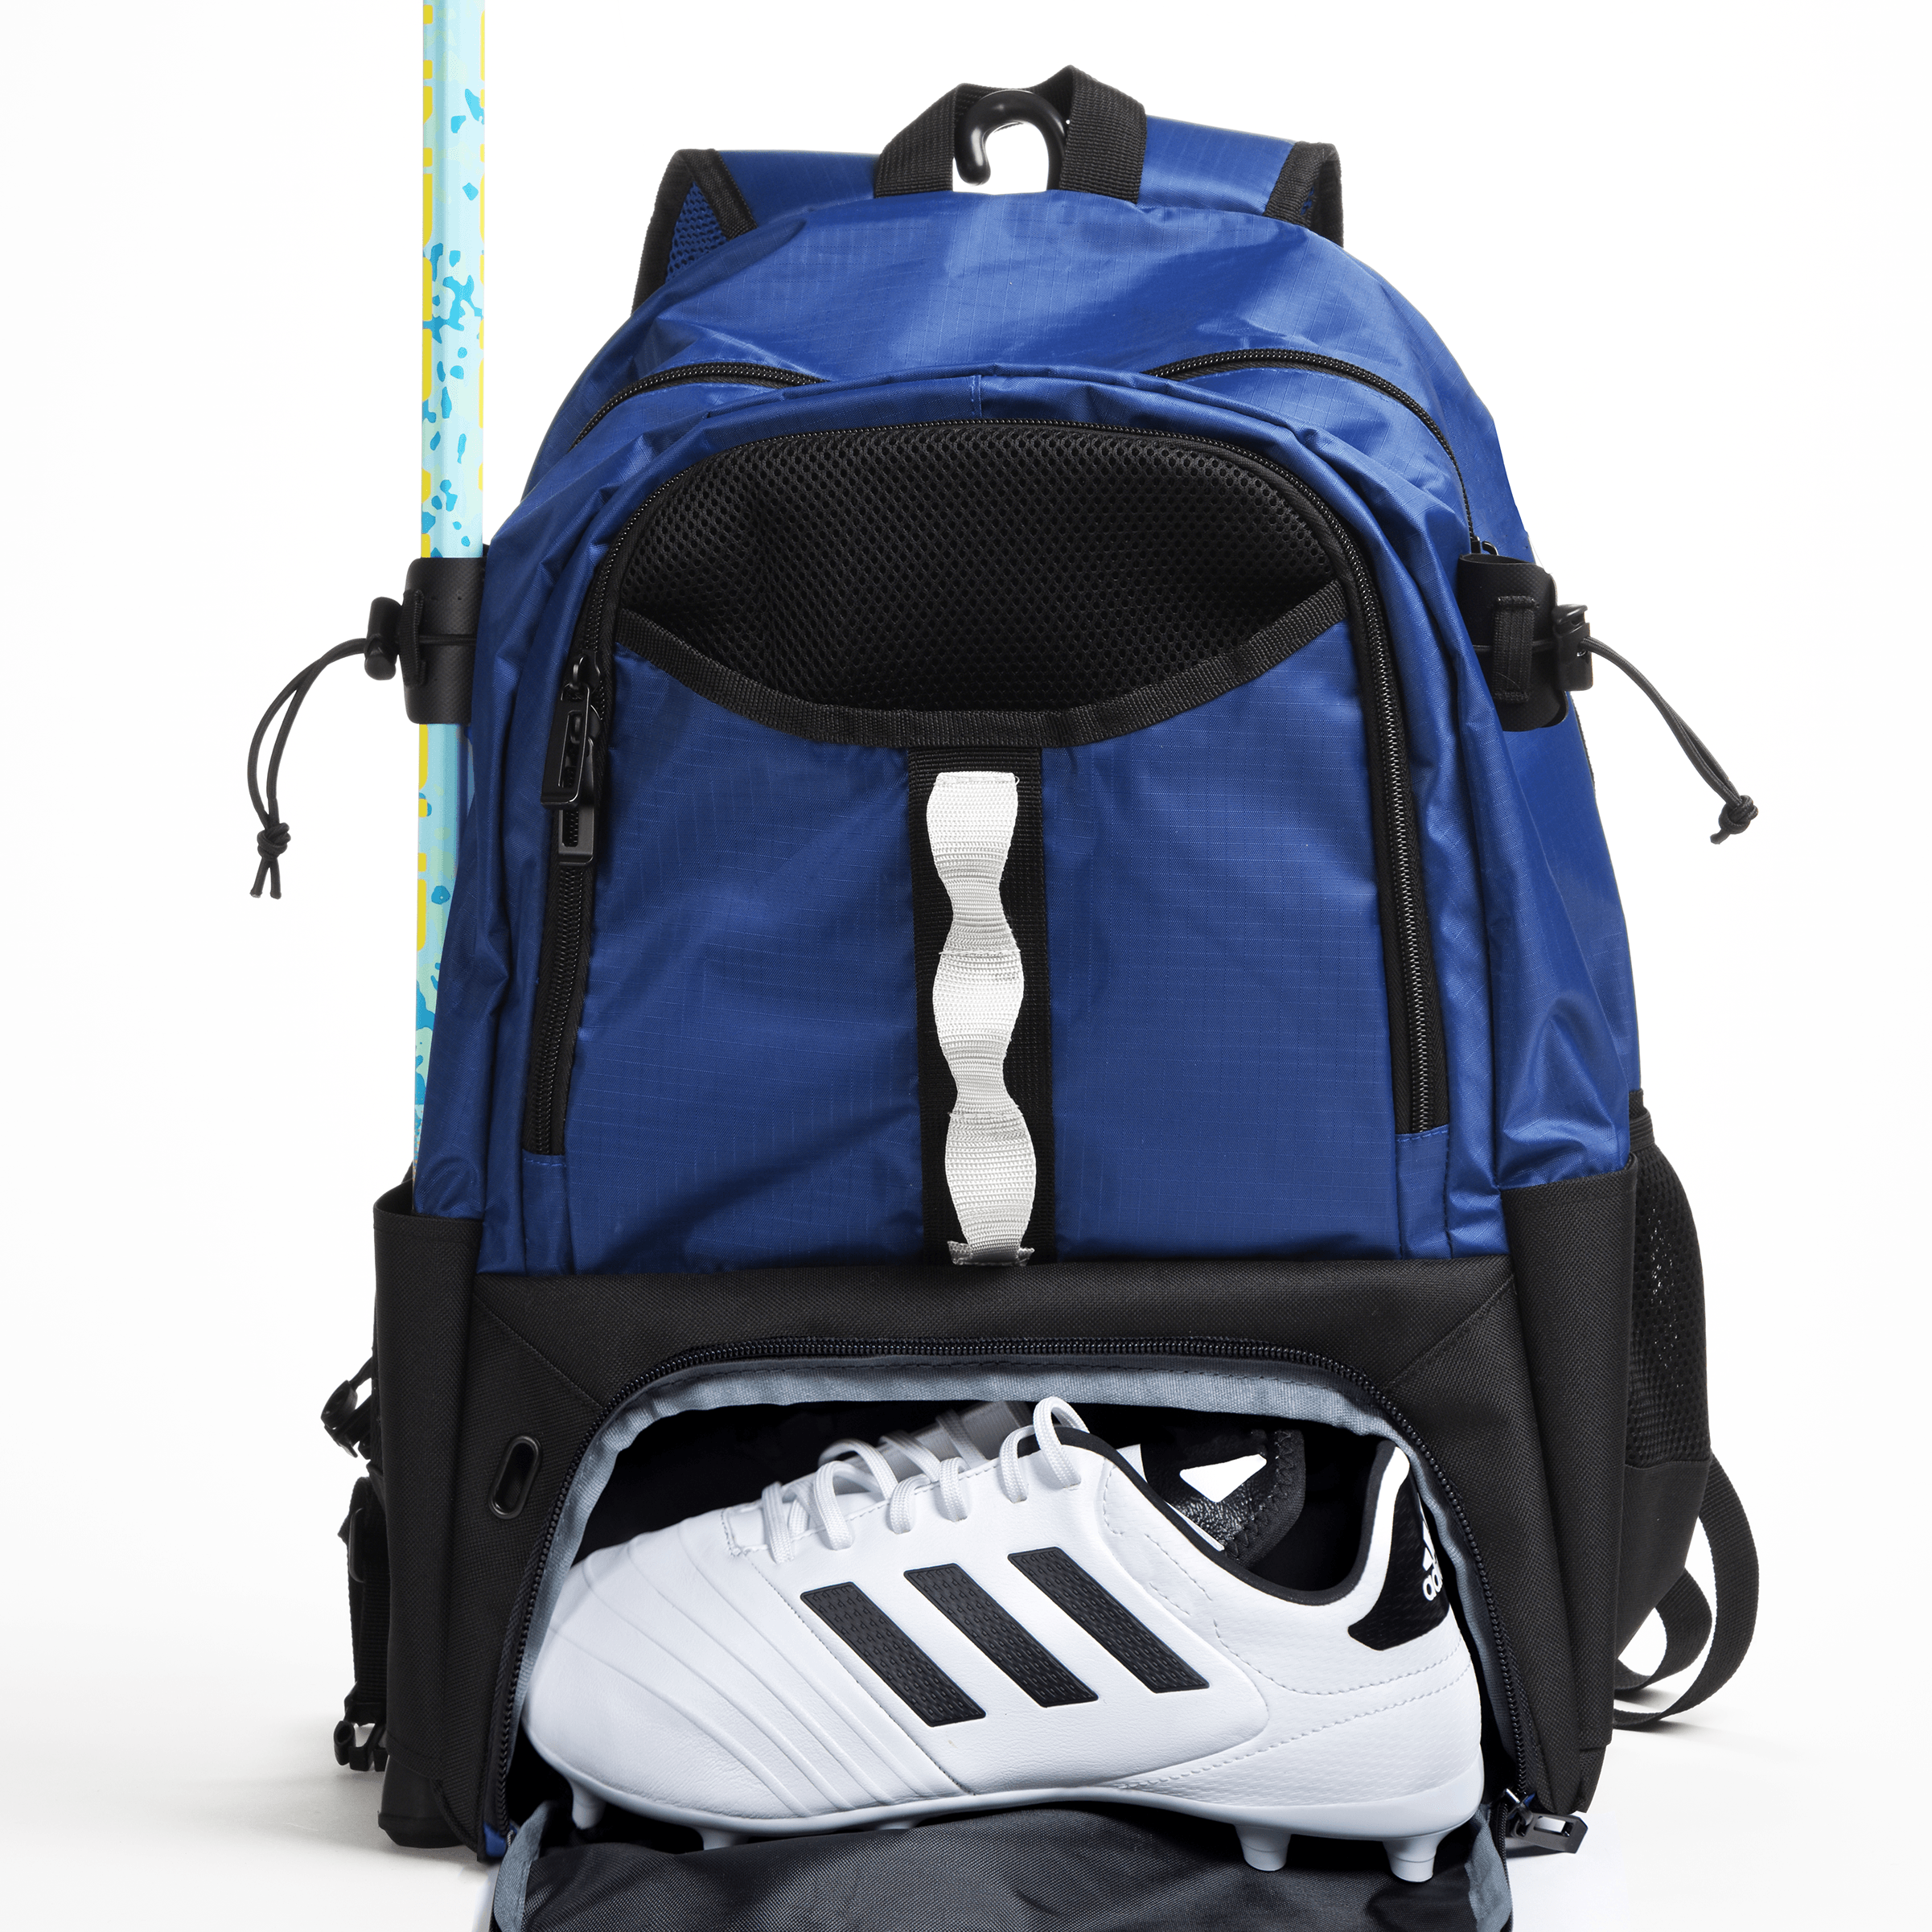 Erant Basketball Backpack with Ball Compartment - Basketball Bags with Ball Holder - Basketball Bag Backpack - Basketball Bags for Boys - Backpack for